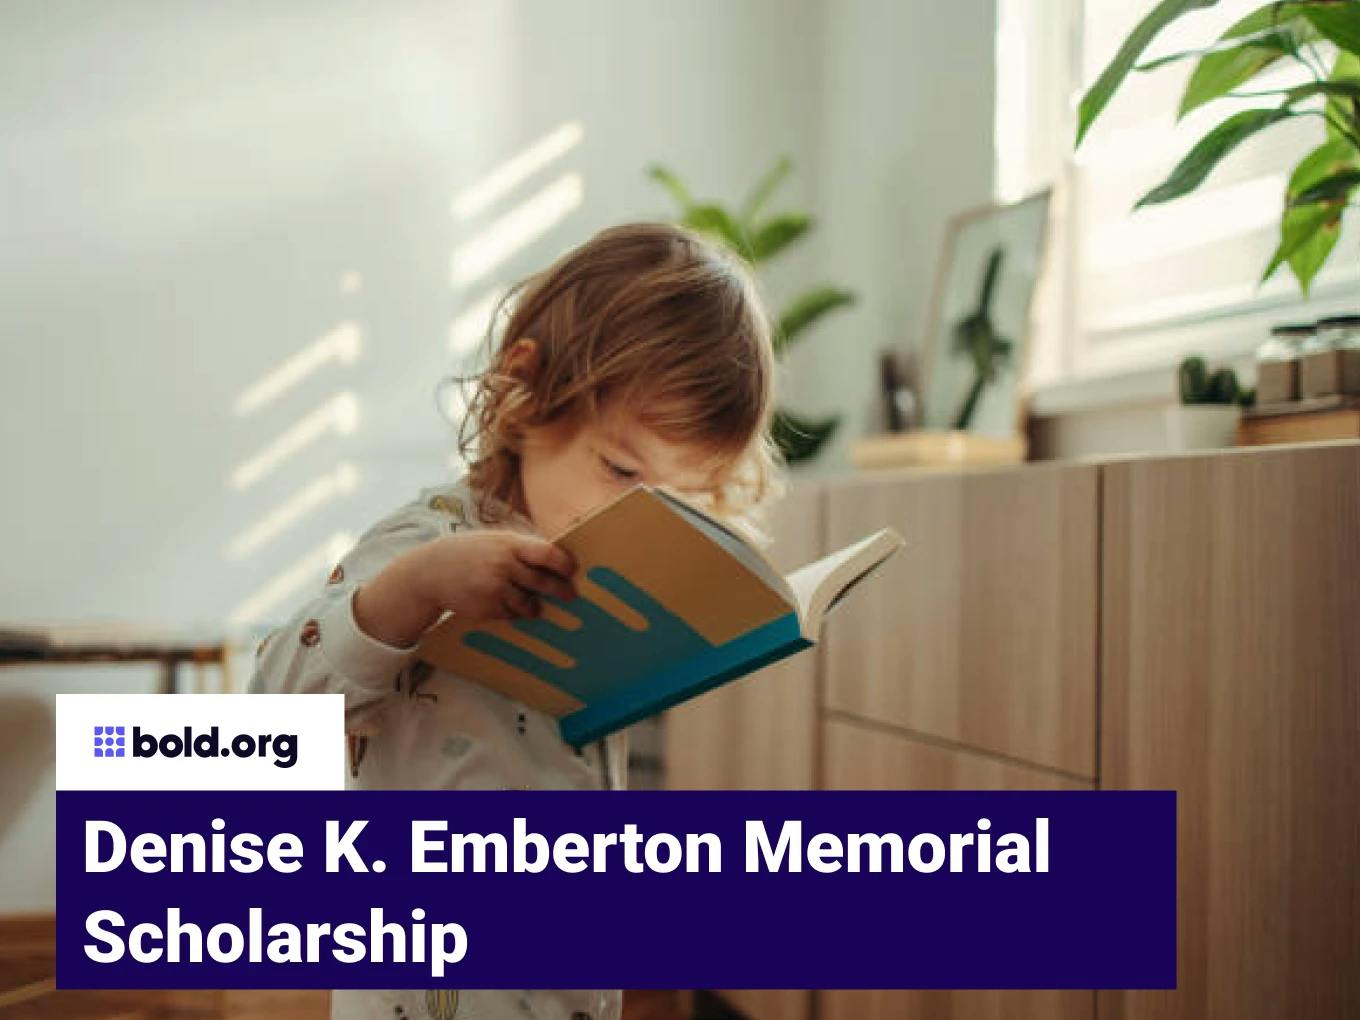 Denise K. Emberton Memorial Scholarship